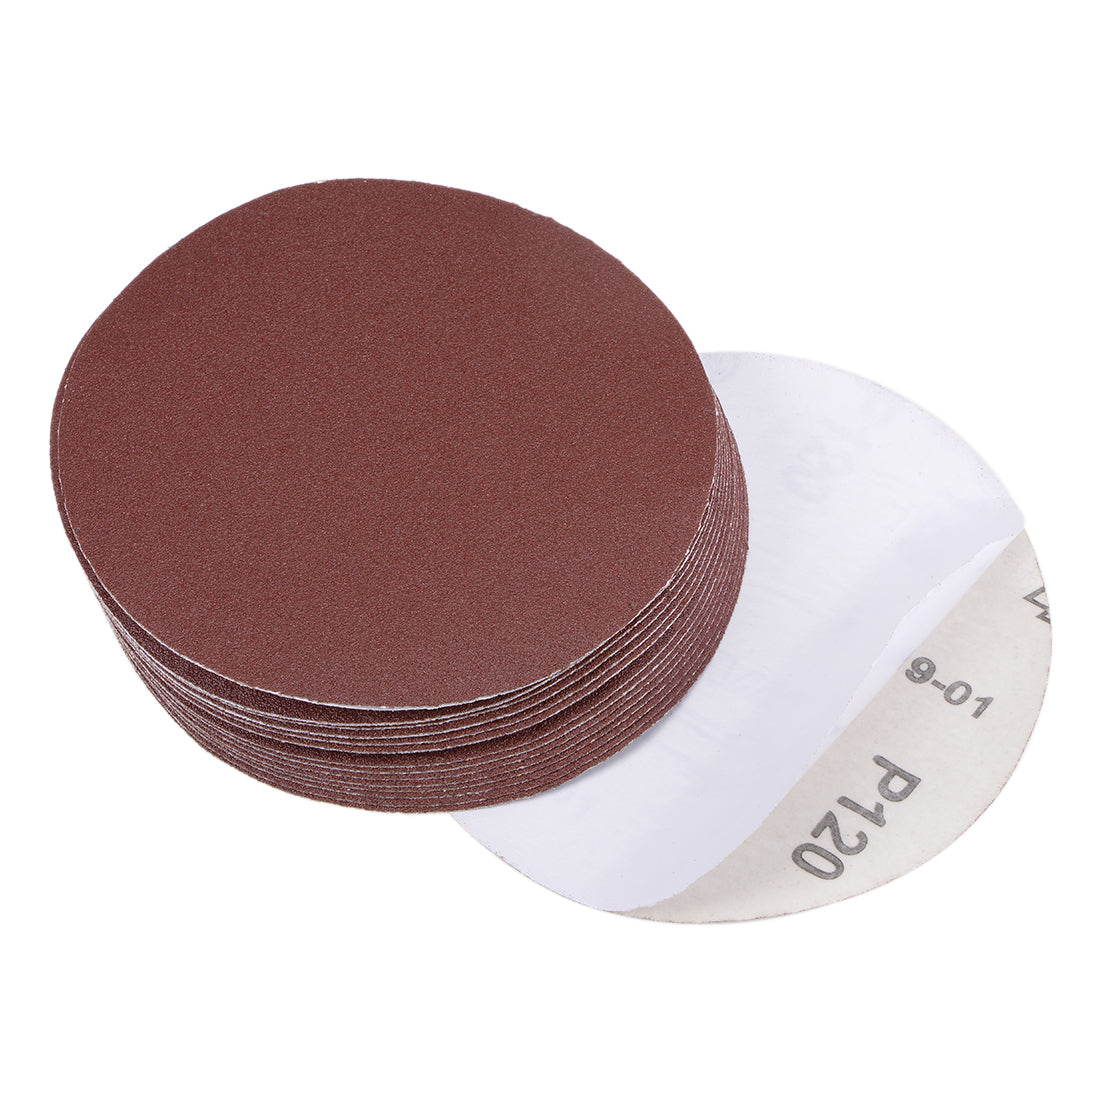 uxcell Uxcell 5-Inch PSA Sanding Disc Aluminum Oxide Adhesive Back Sandpaper 120 Grit 15 Pcs